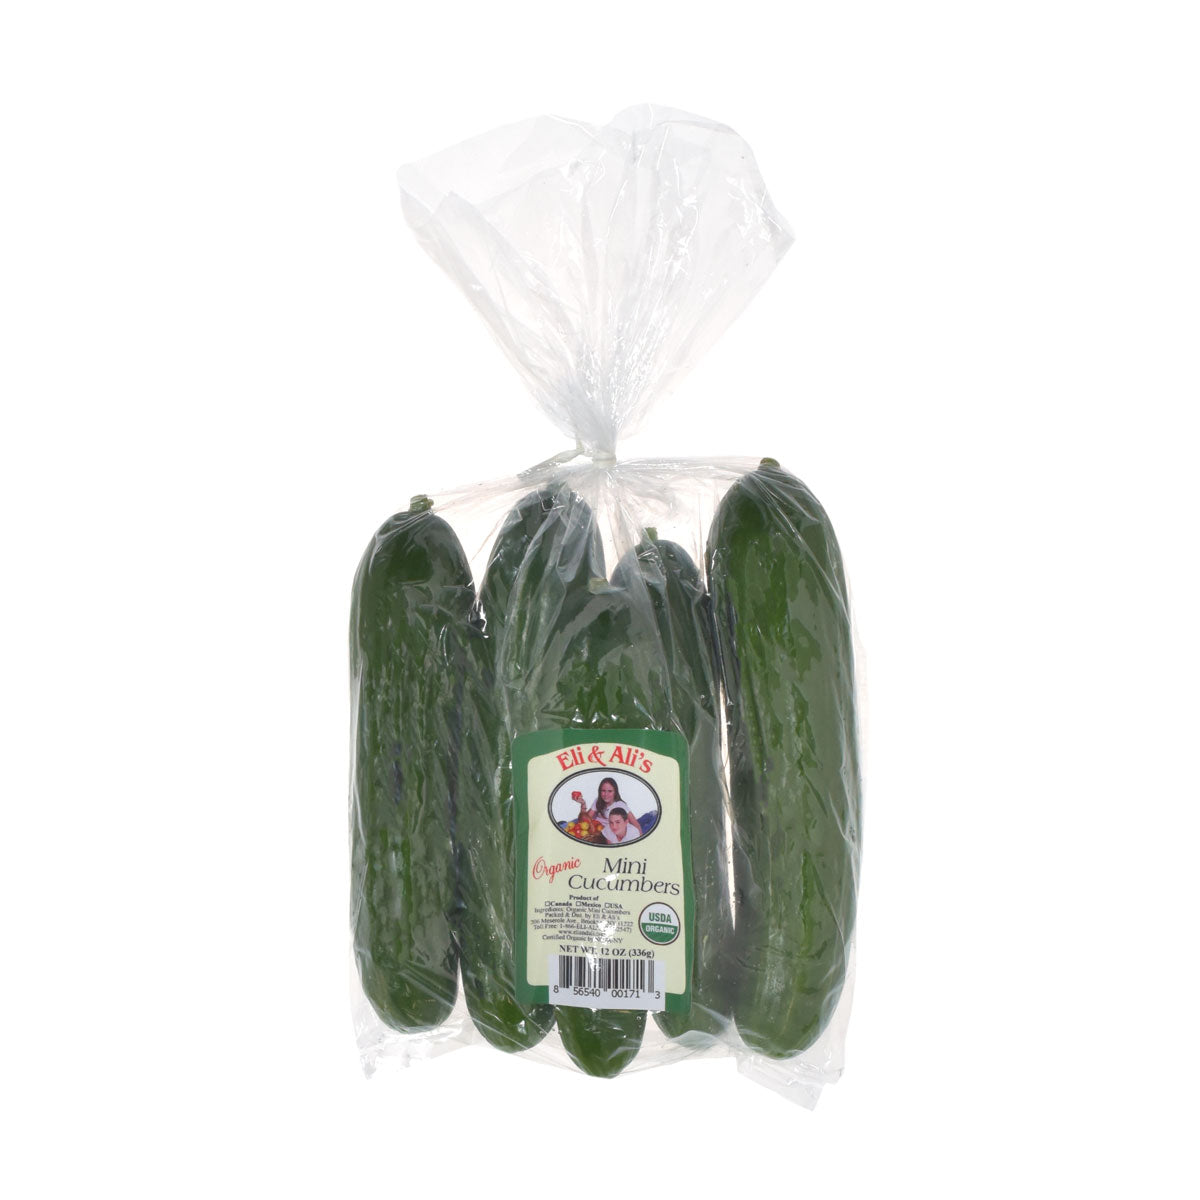 Eli & Ali'S Organic Mini Cucumbers Pack 12 OZ